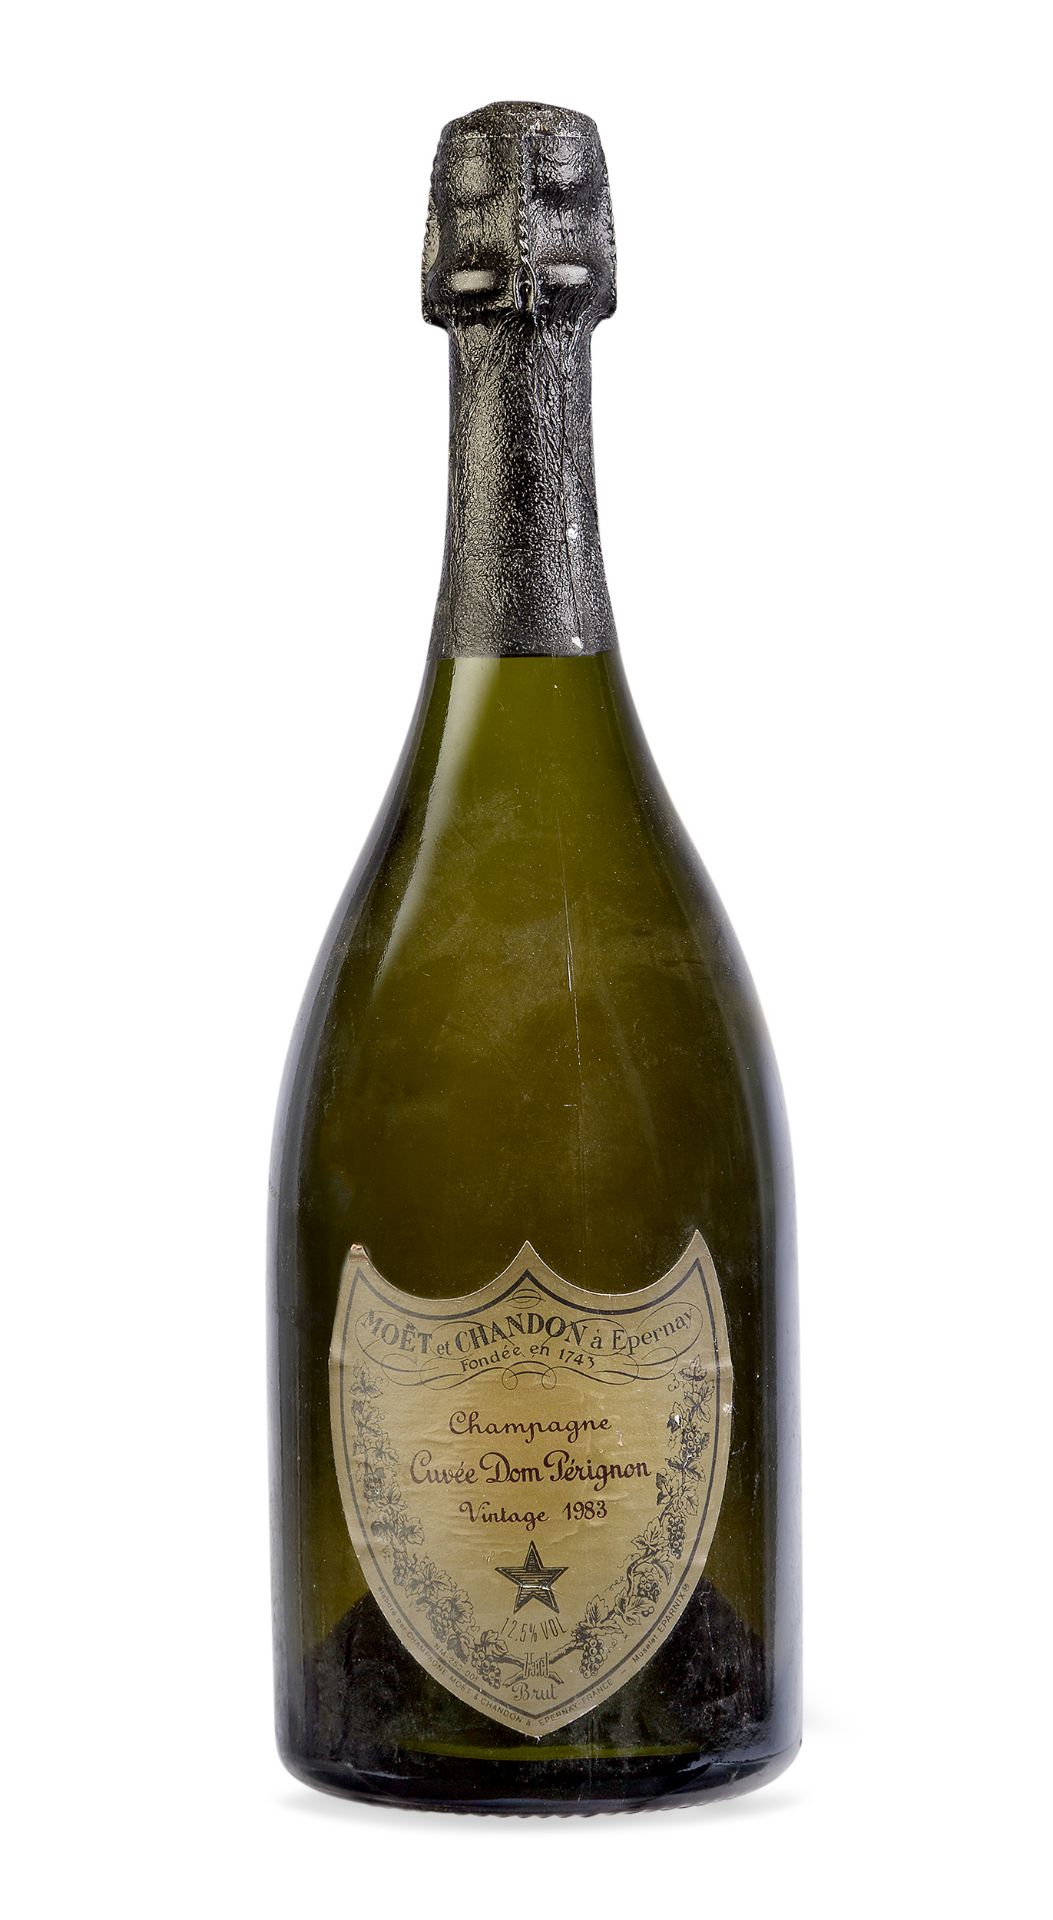 Dom Pérignon, Epernay, 1983, a single bottle